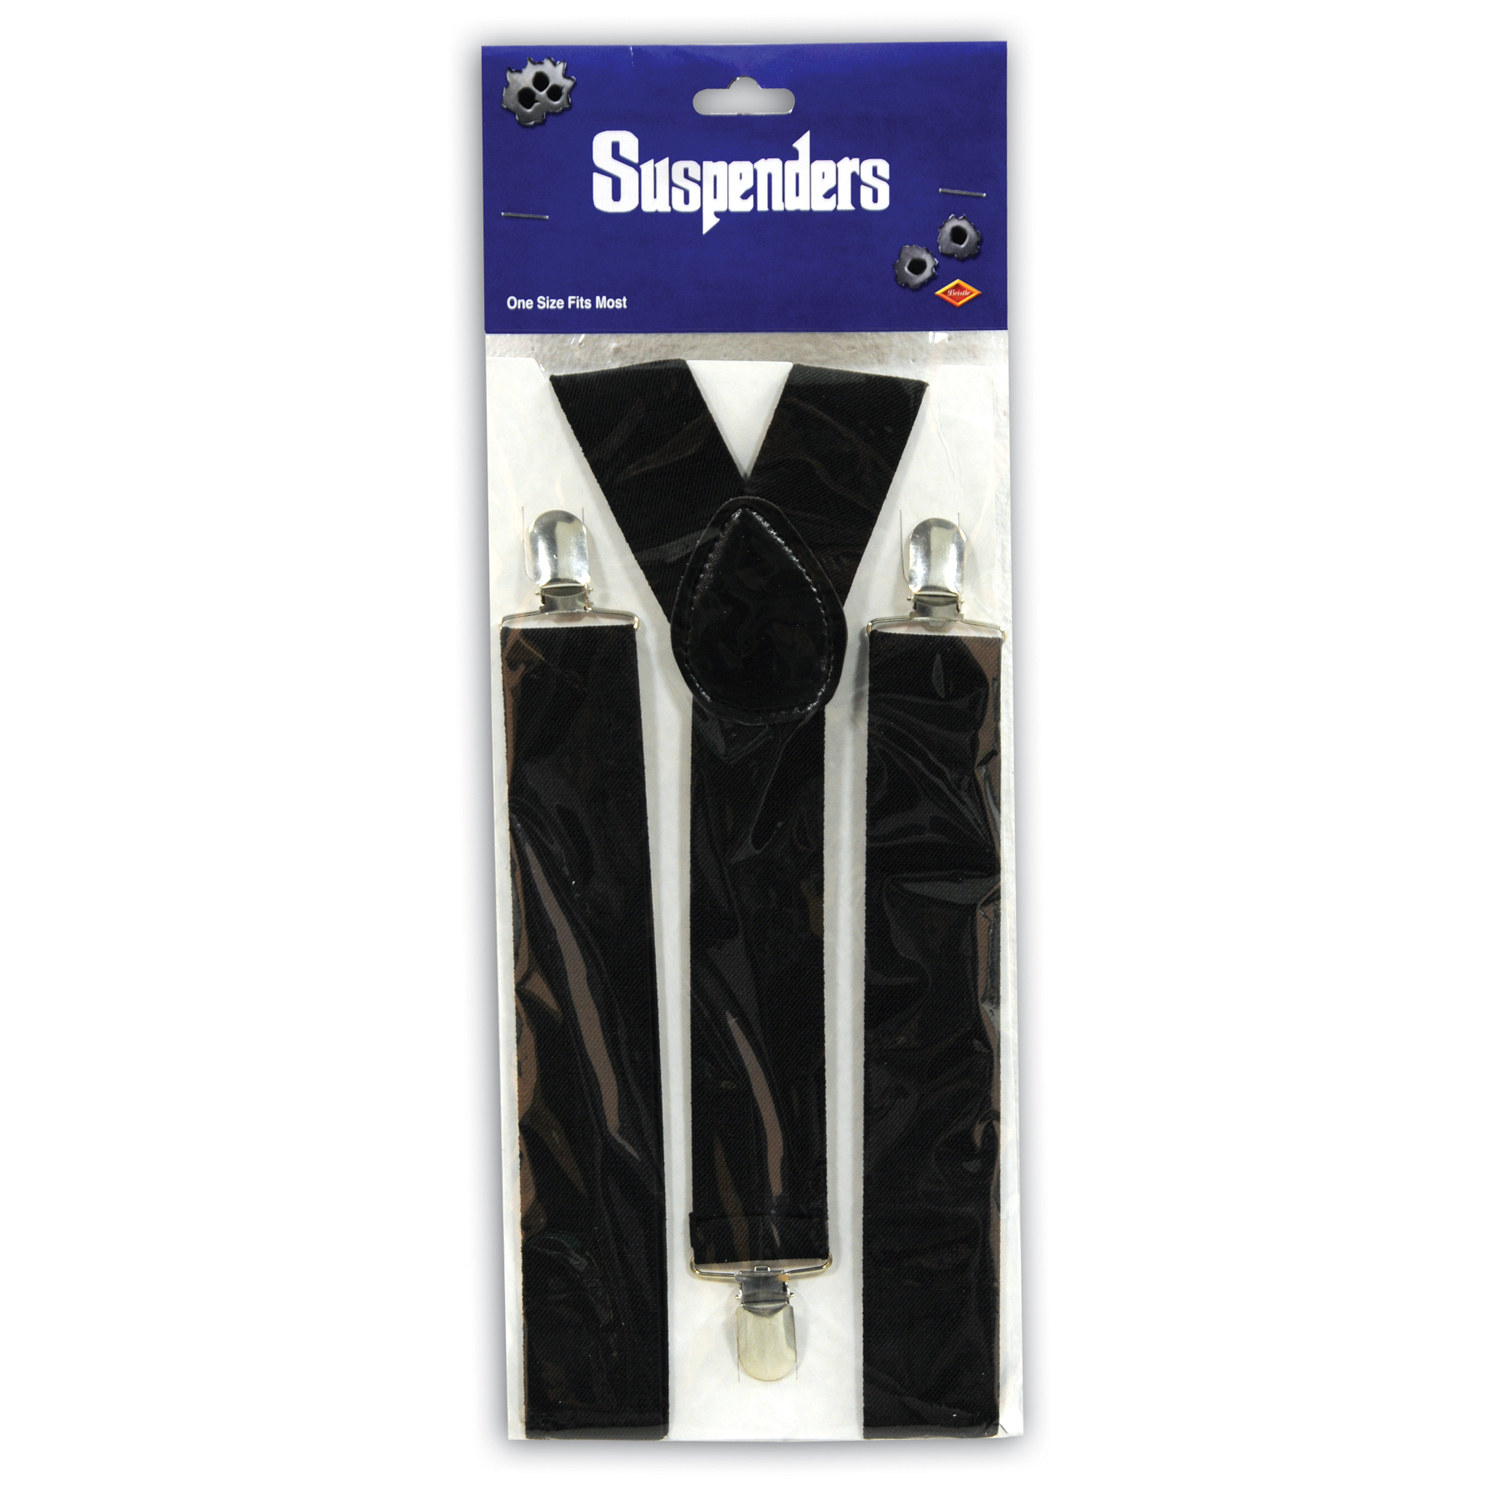 Black suspenders with adjustable straps.